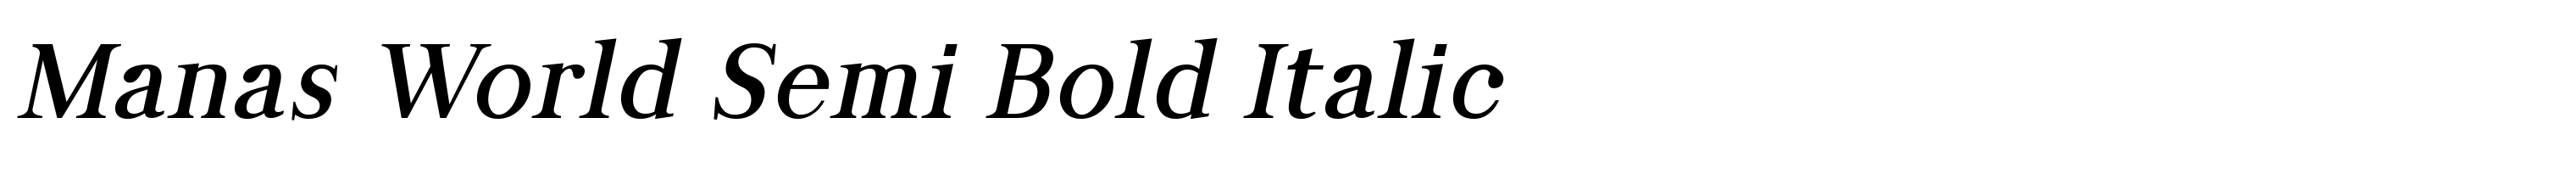 Manas World Semi Bold Italic